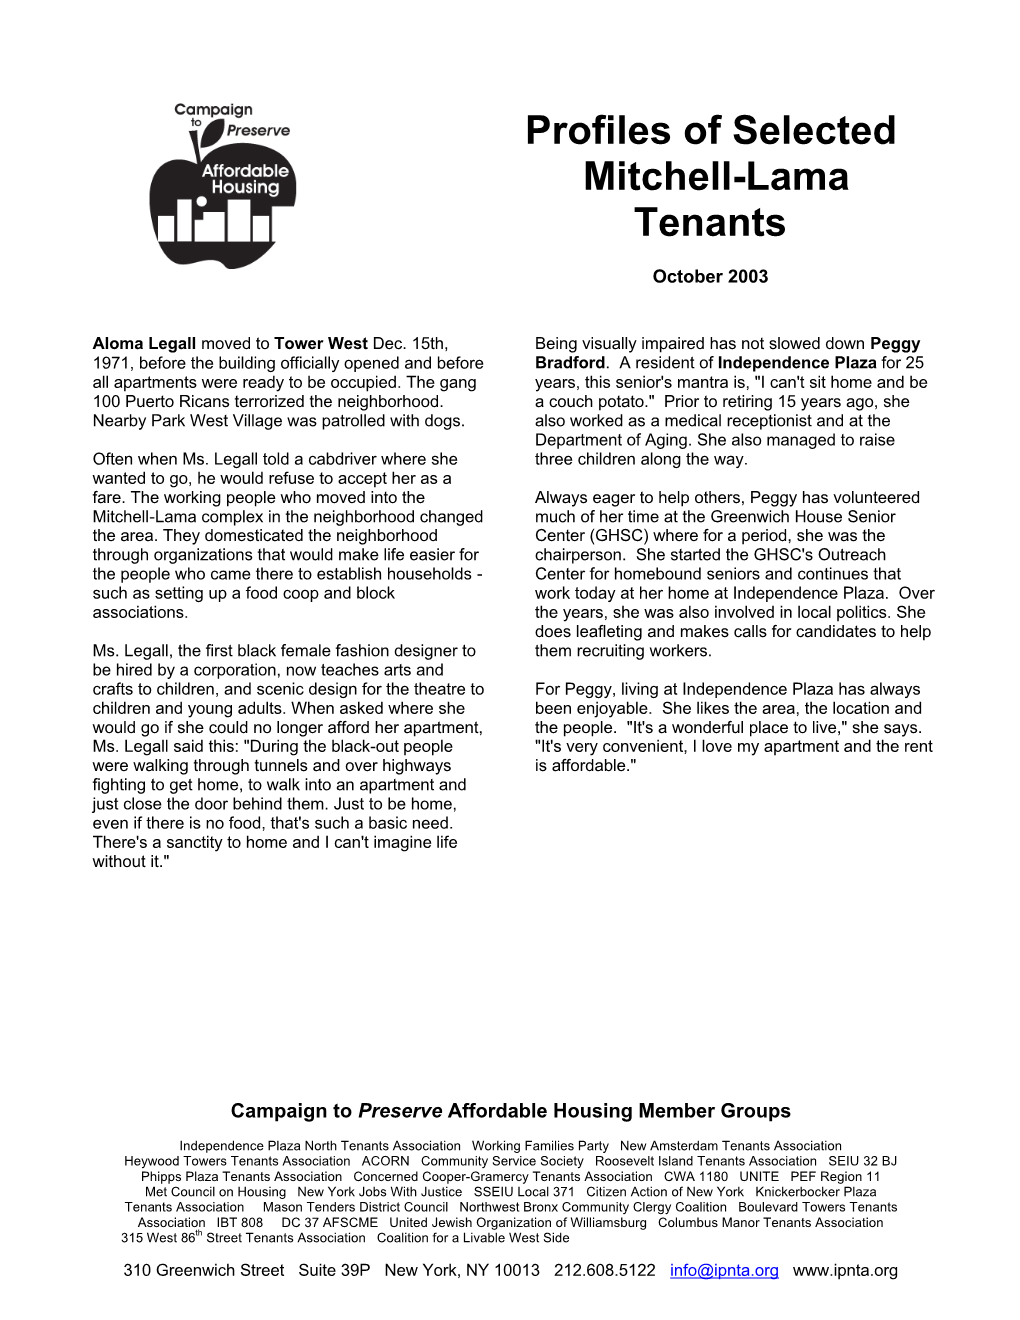 Mitchell-Lama Tenant Profiles